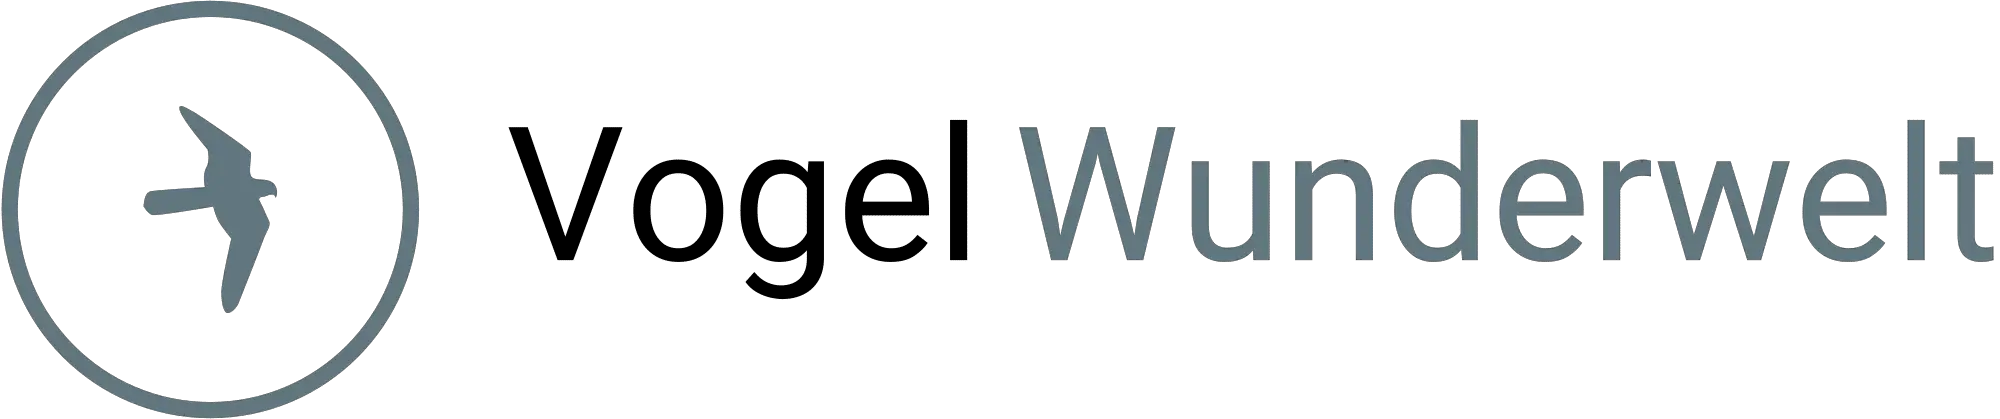 Vogel Wunderwelt logo